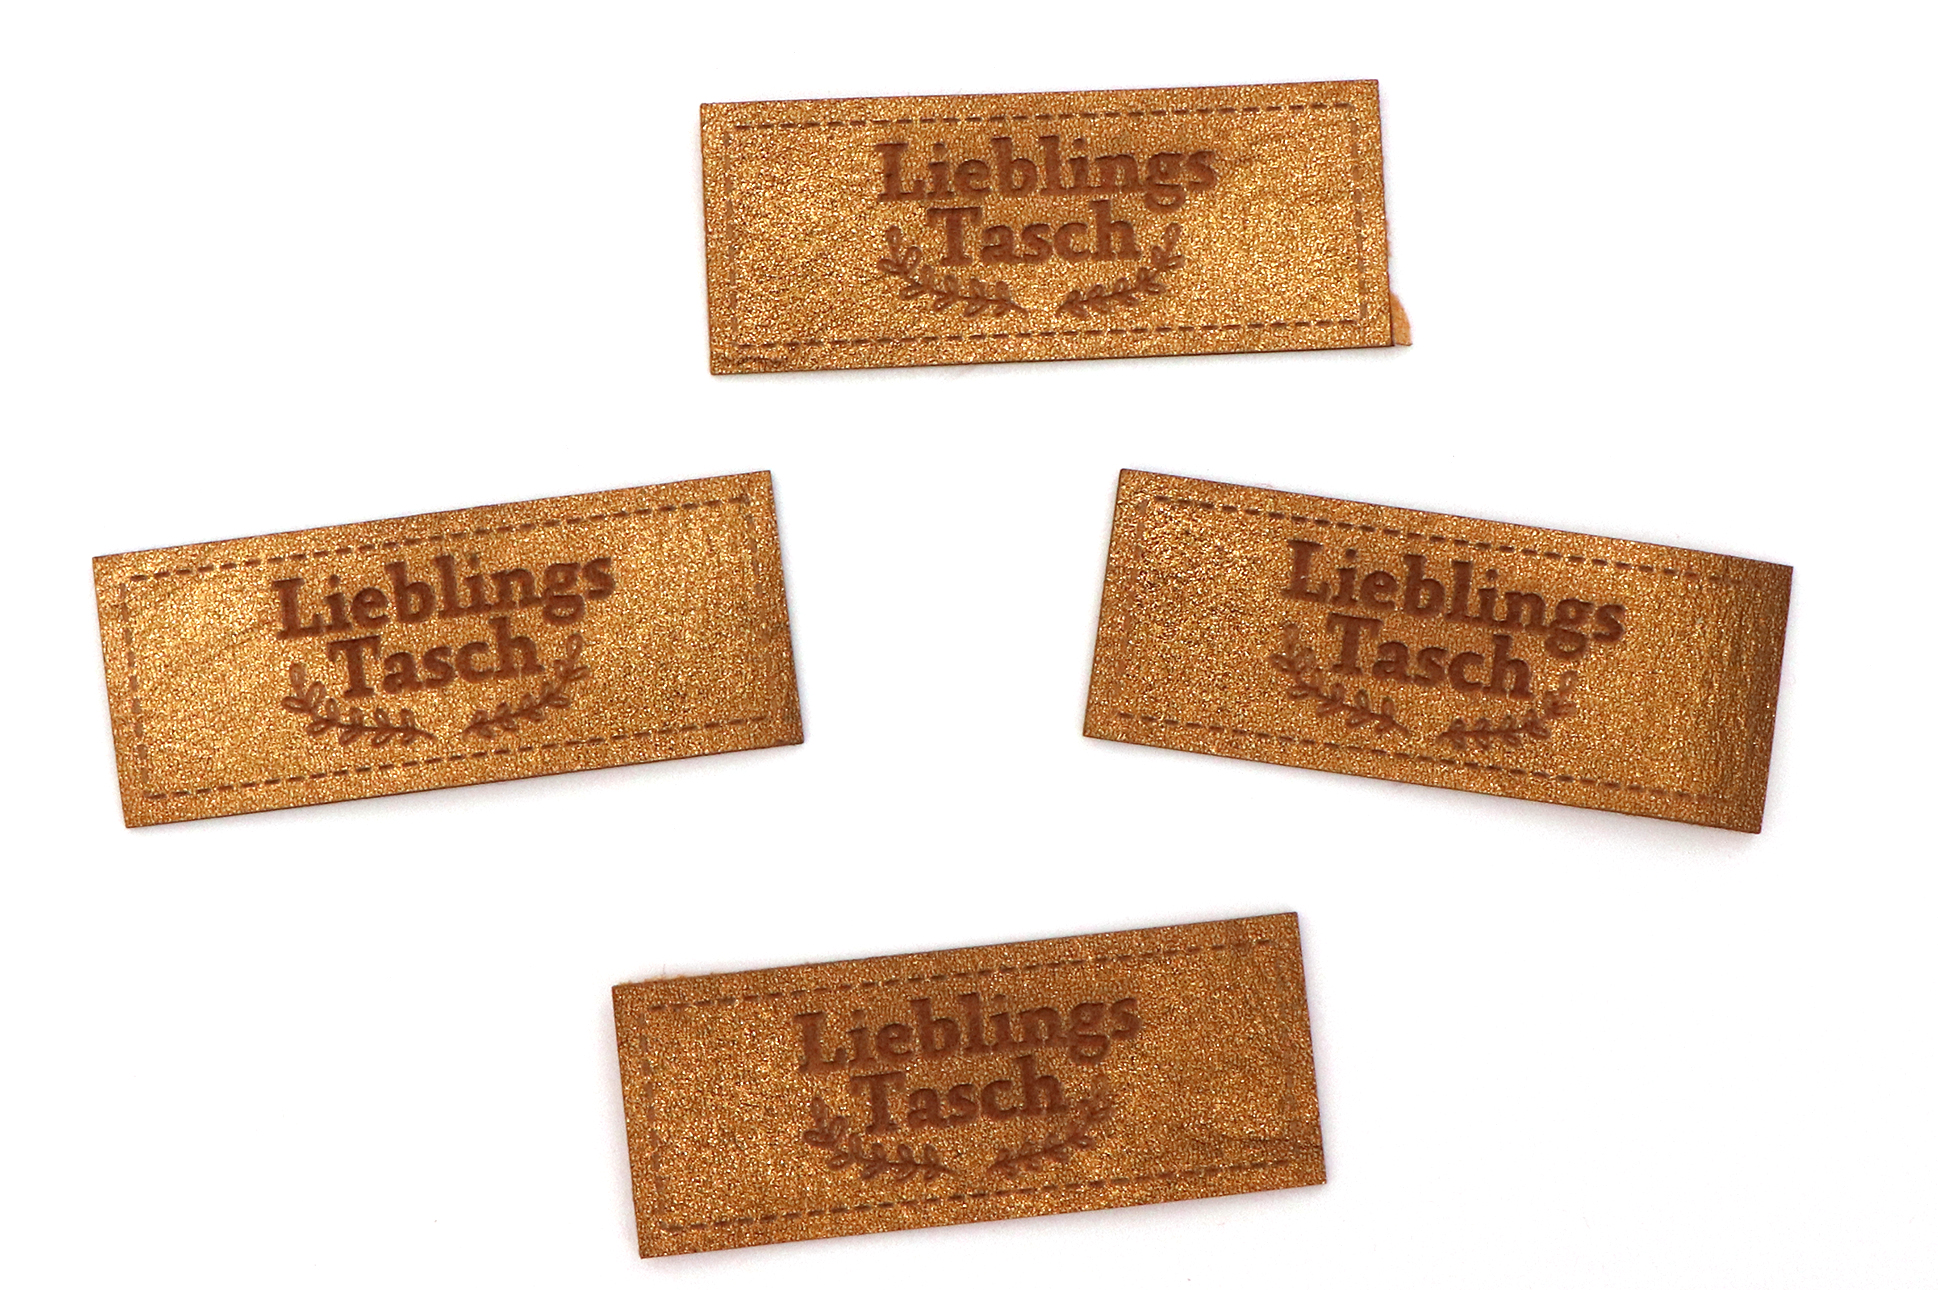 Label, "Lieblings Tasch" dunkles bronze